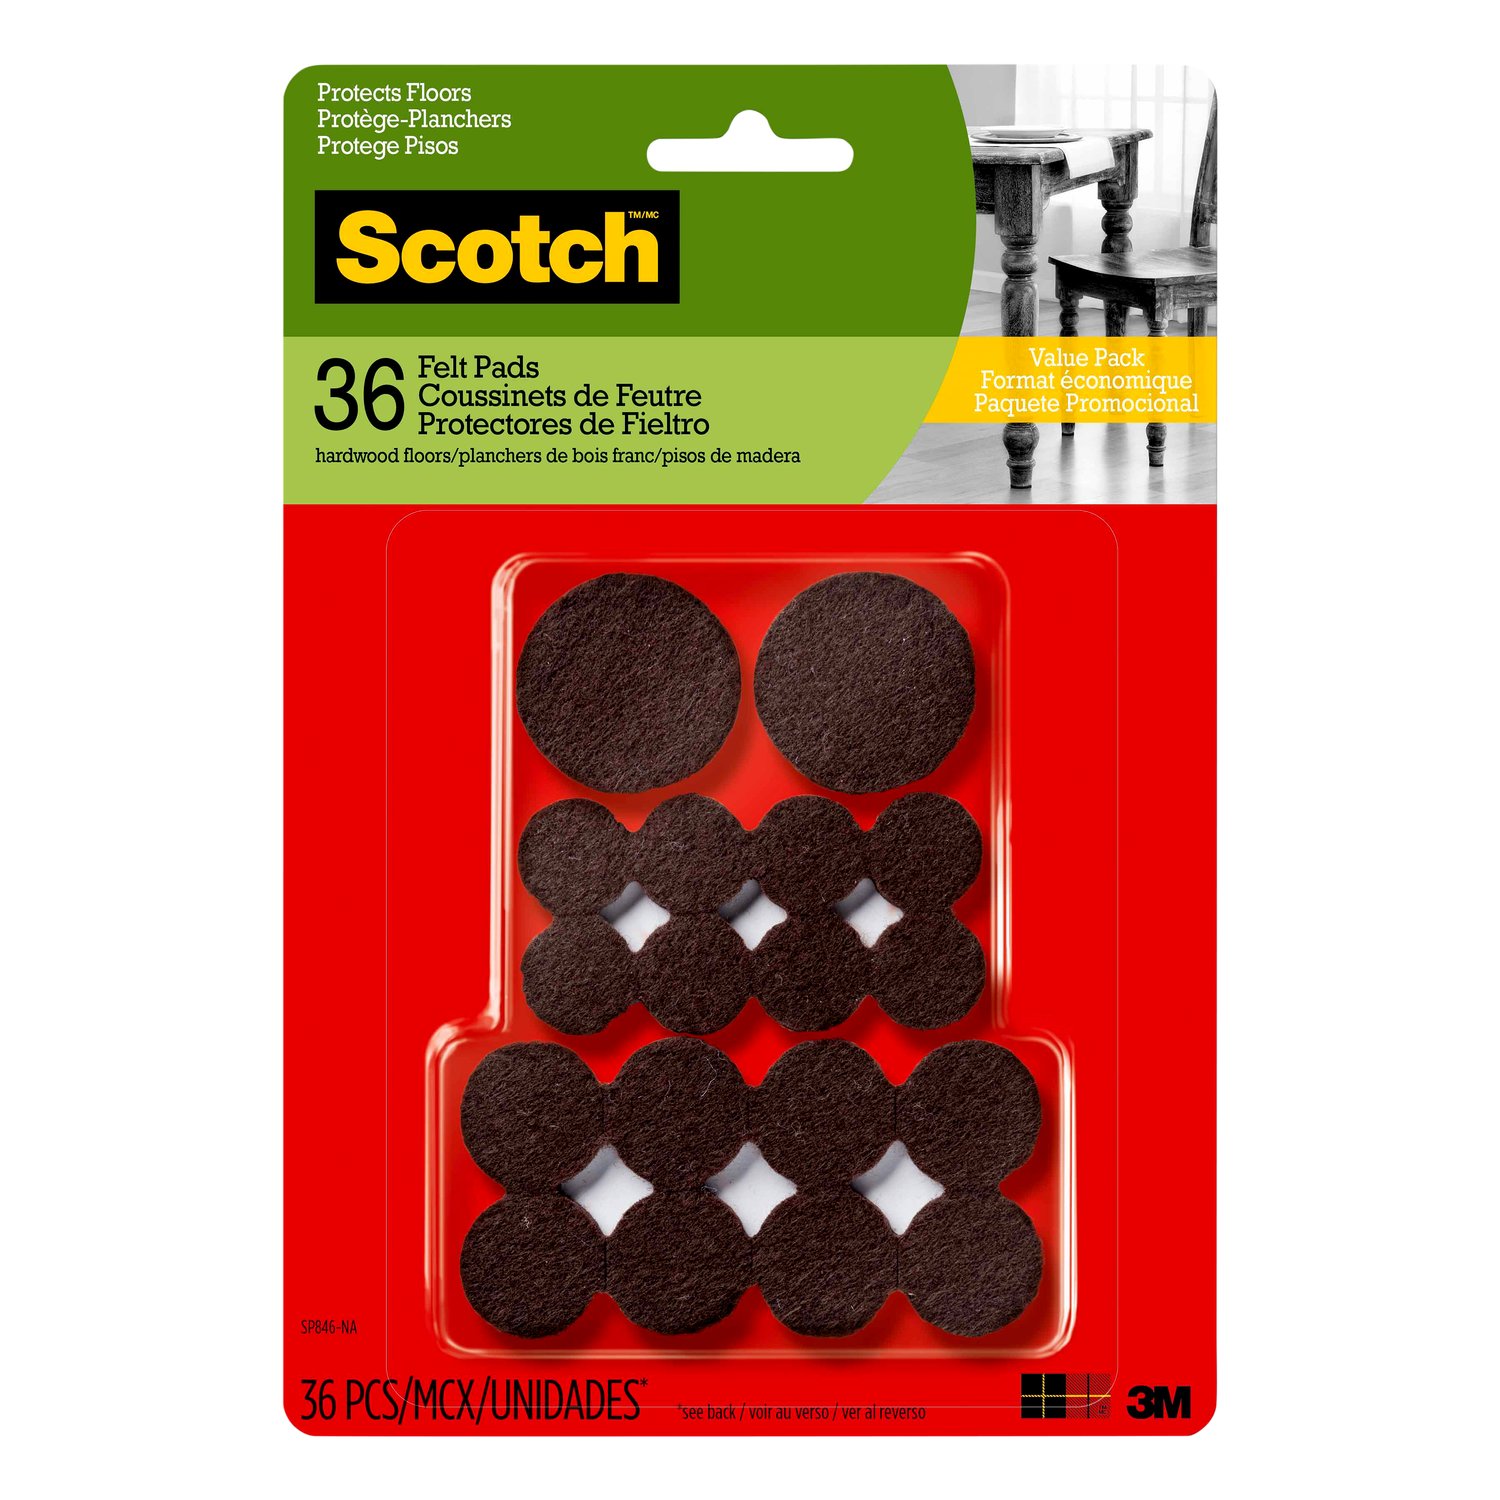 7100112863 - Scotch Felt Pads Value Pack, SP846-NA, Brown, 36 Pack